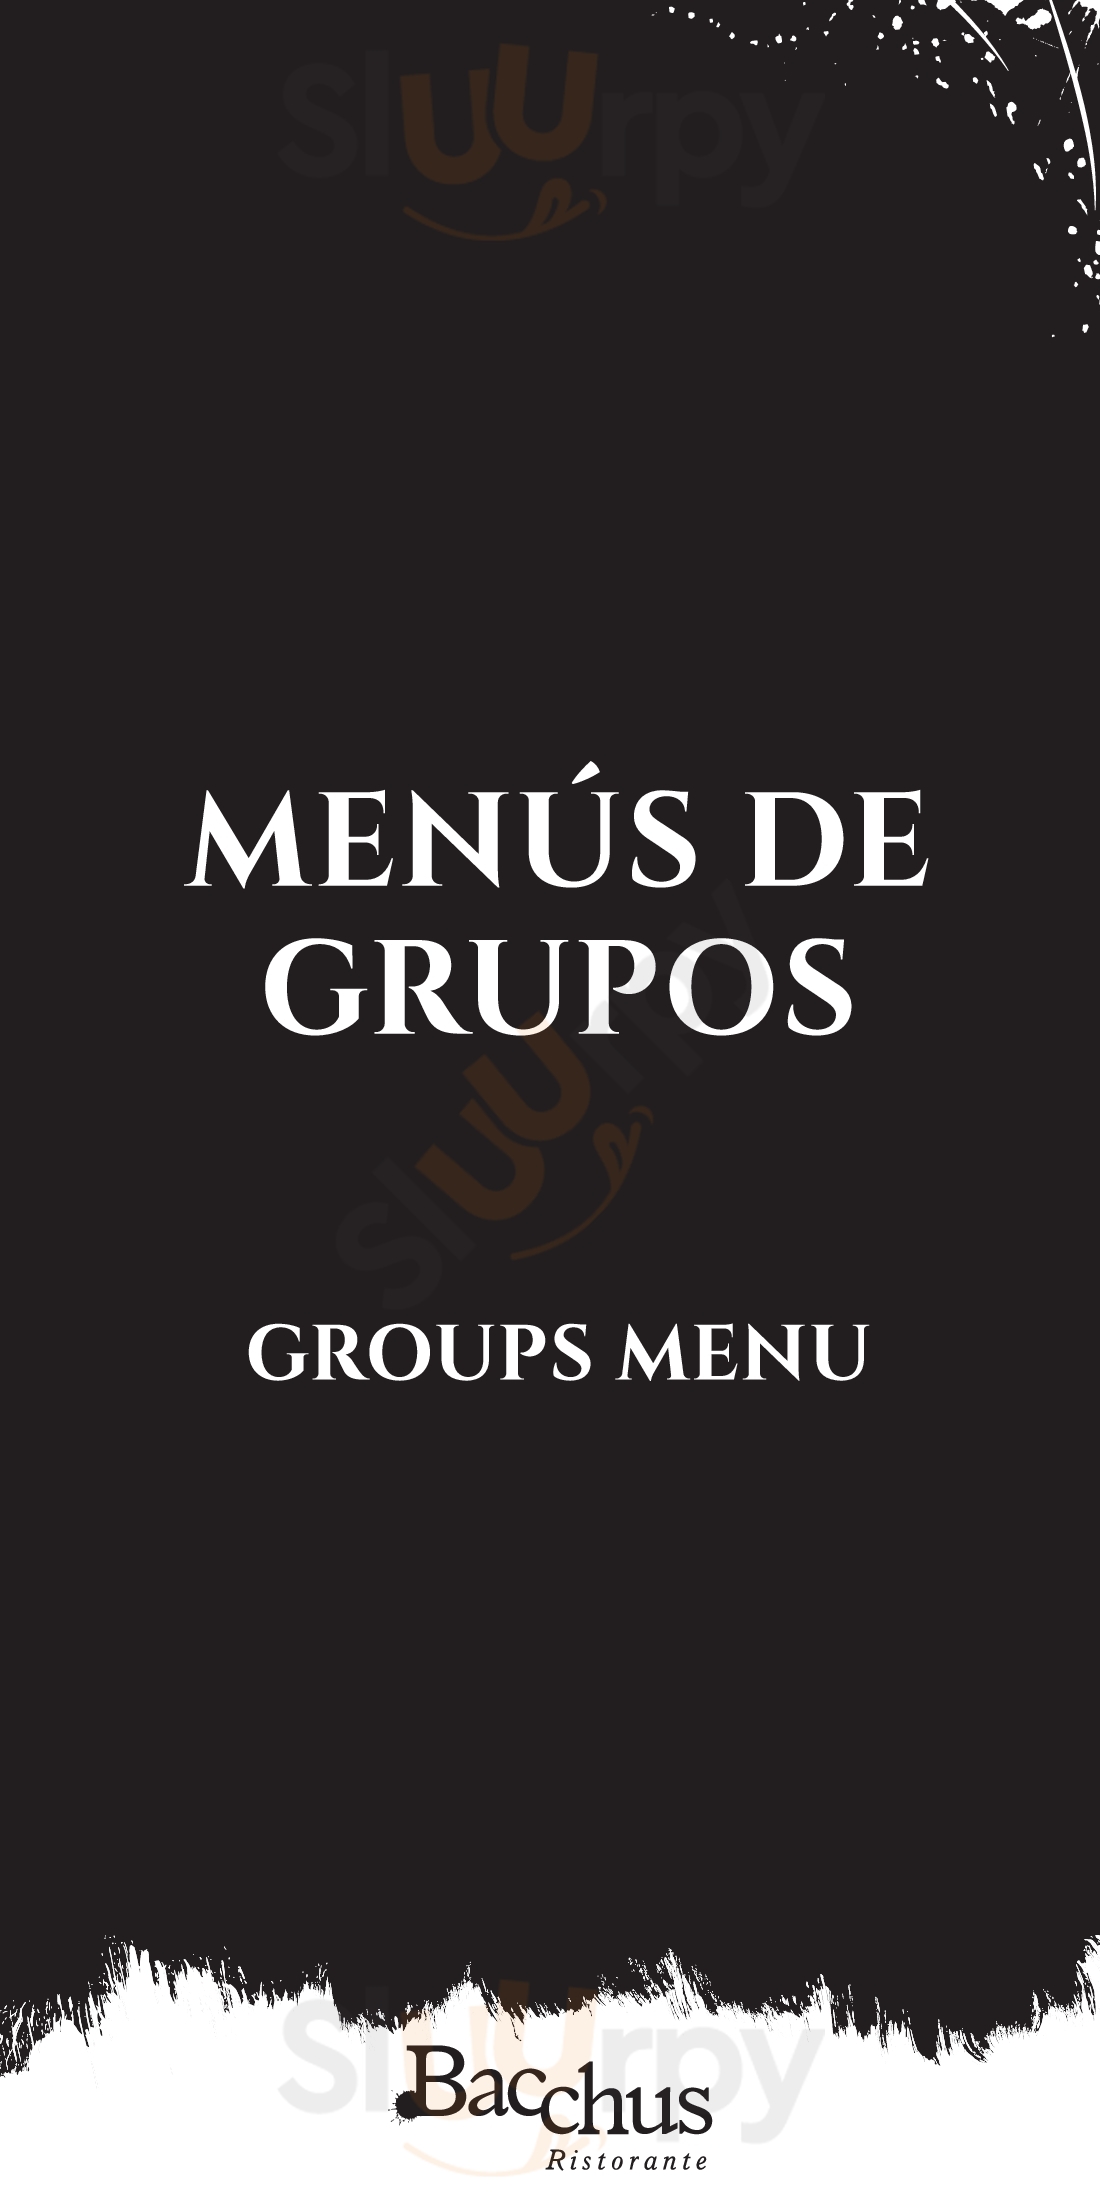 Bacchus Restaurante Santa Ana Menu - 1